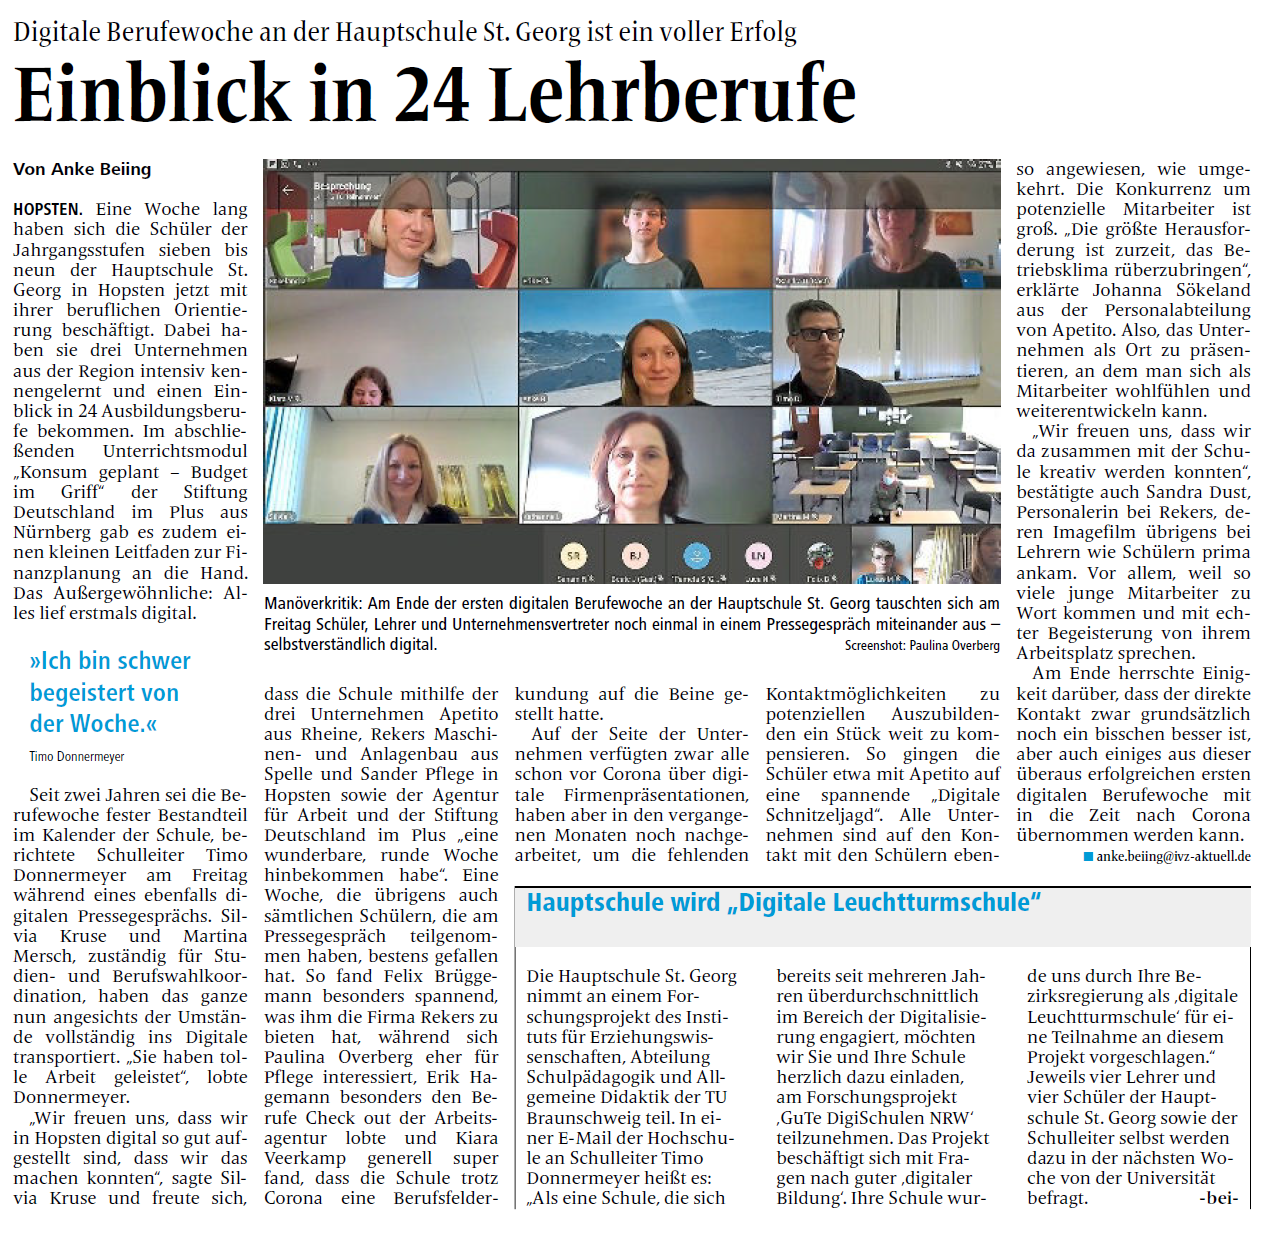 Ibbenbrener Volkszeitung 2642021 Anke Beiing Autorinivzmedien GmbH Co KG alle Rechte vorbehalten